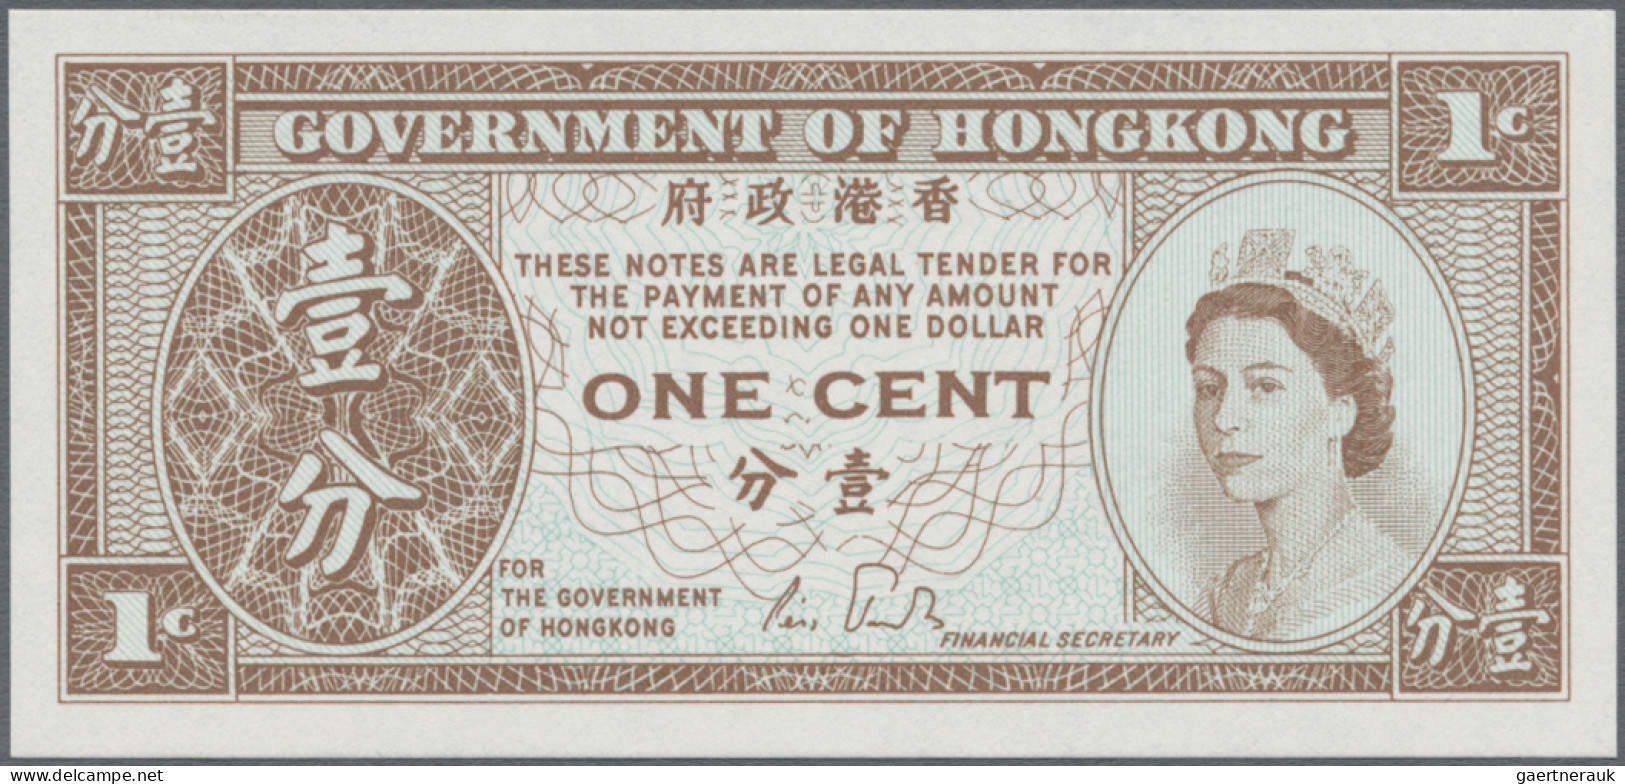 Hong Kong: Government of Hong Kong, very nice group of 9 small size notes, serie